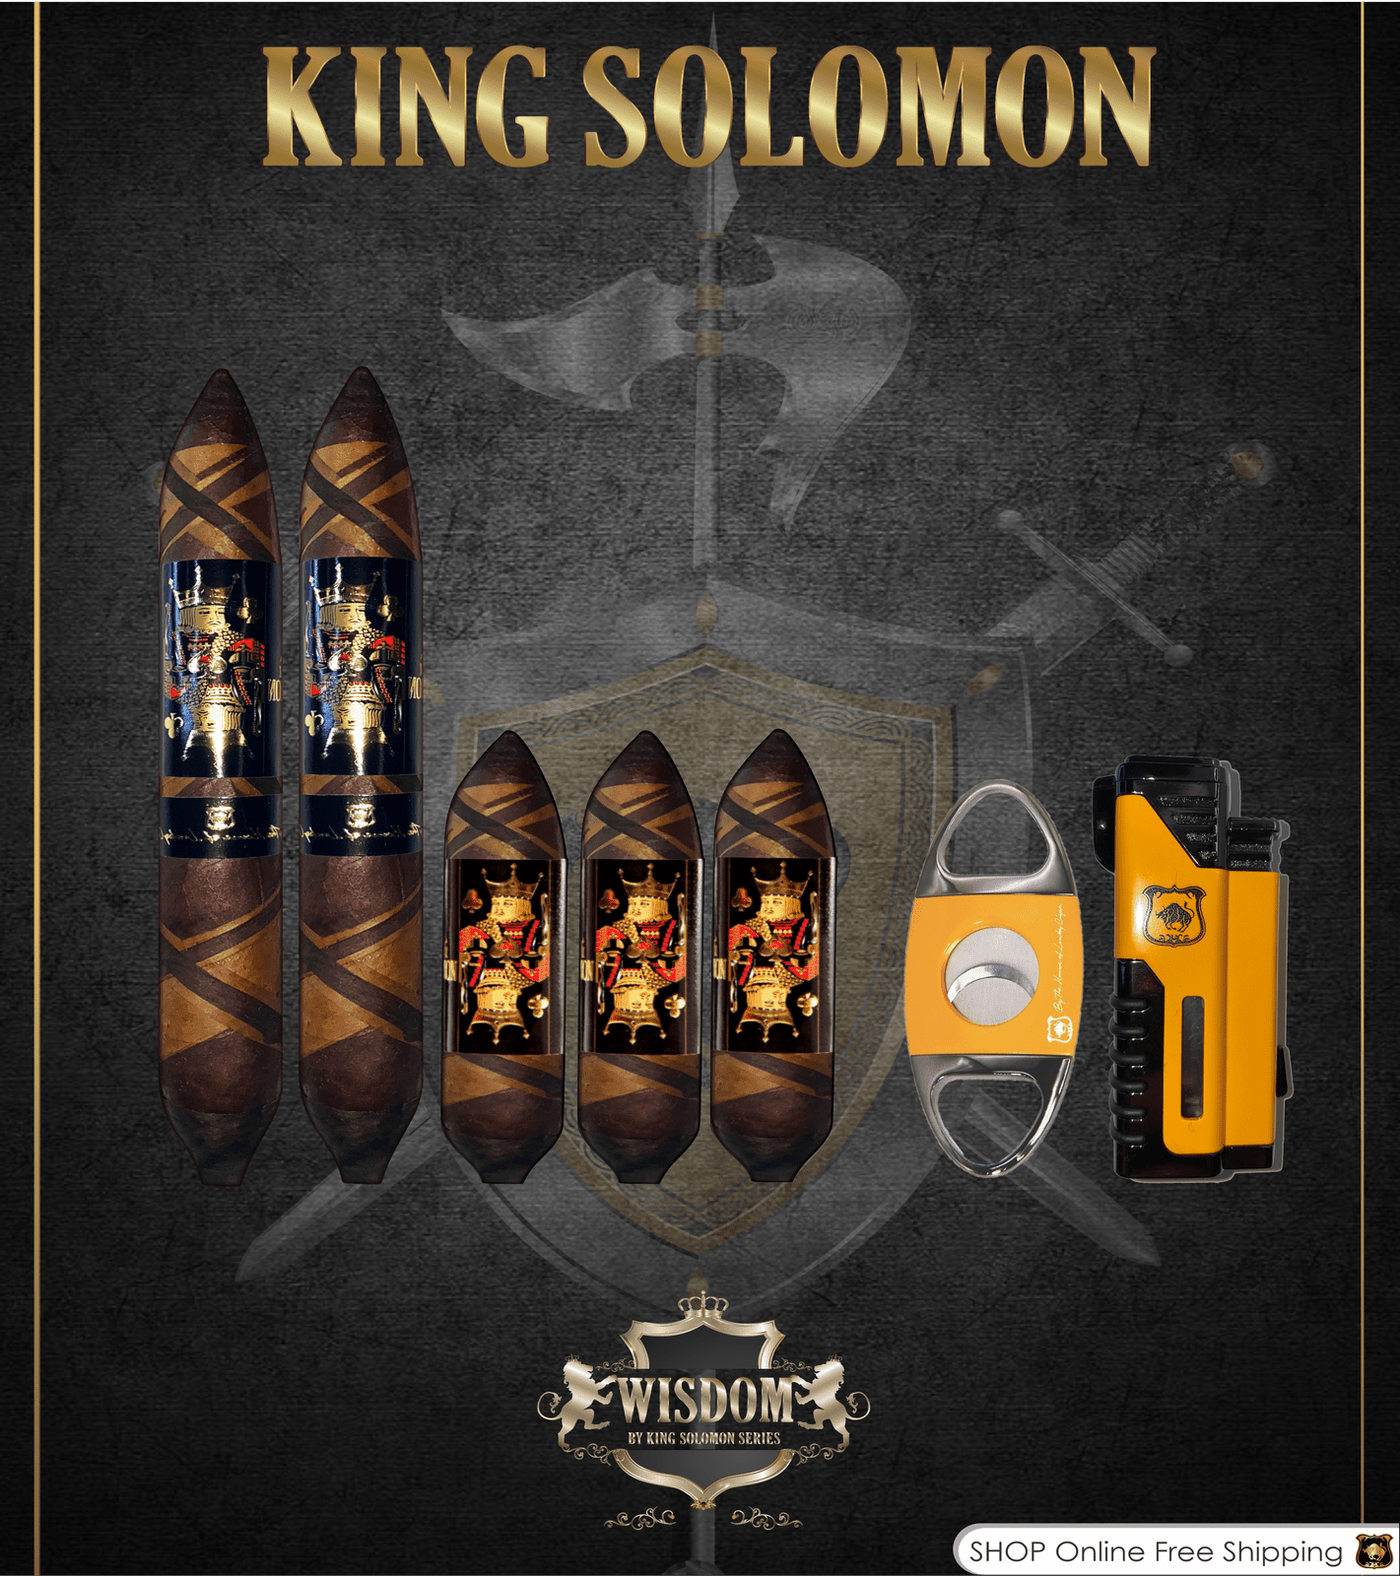 Wisdom 4x60 Cigar From The King Solomon Series: Set of 3 and 2 King Solomon 7x58 Cigar with Cutter and Lighter